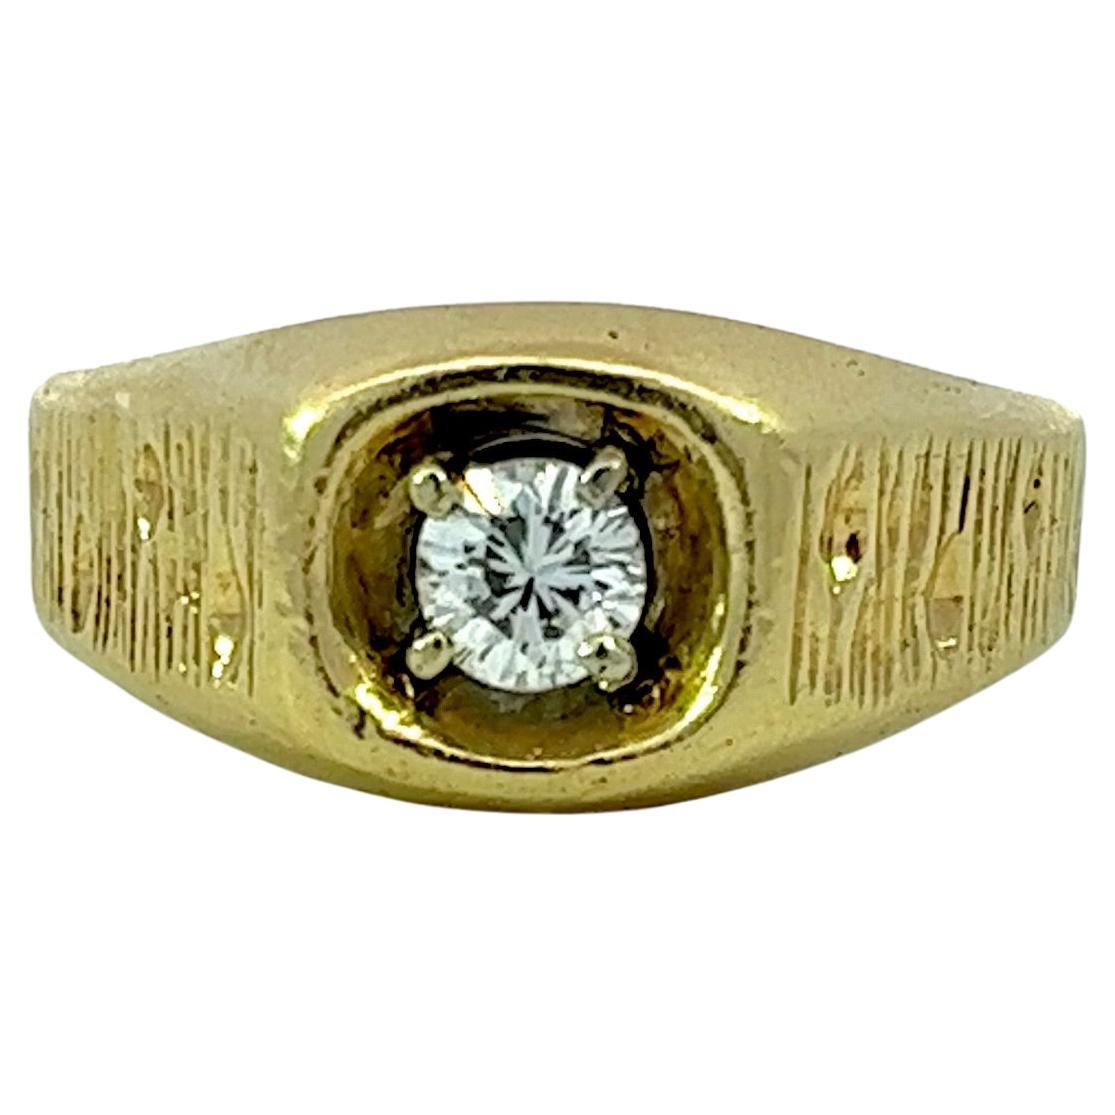 Vintage Artisan Men's Gold Diamond Ring: .45 Carat Diamond, Sizable 10.5